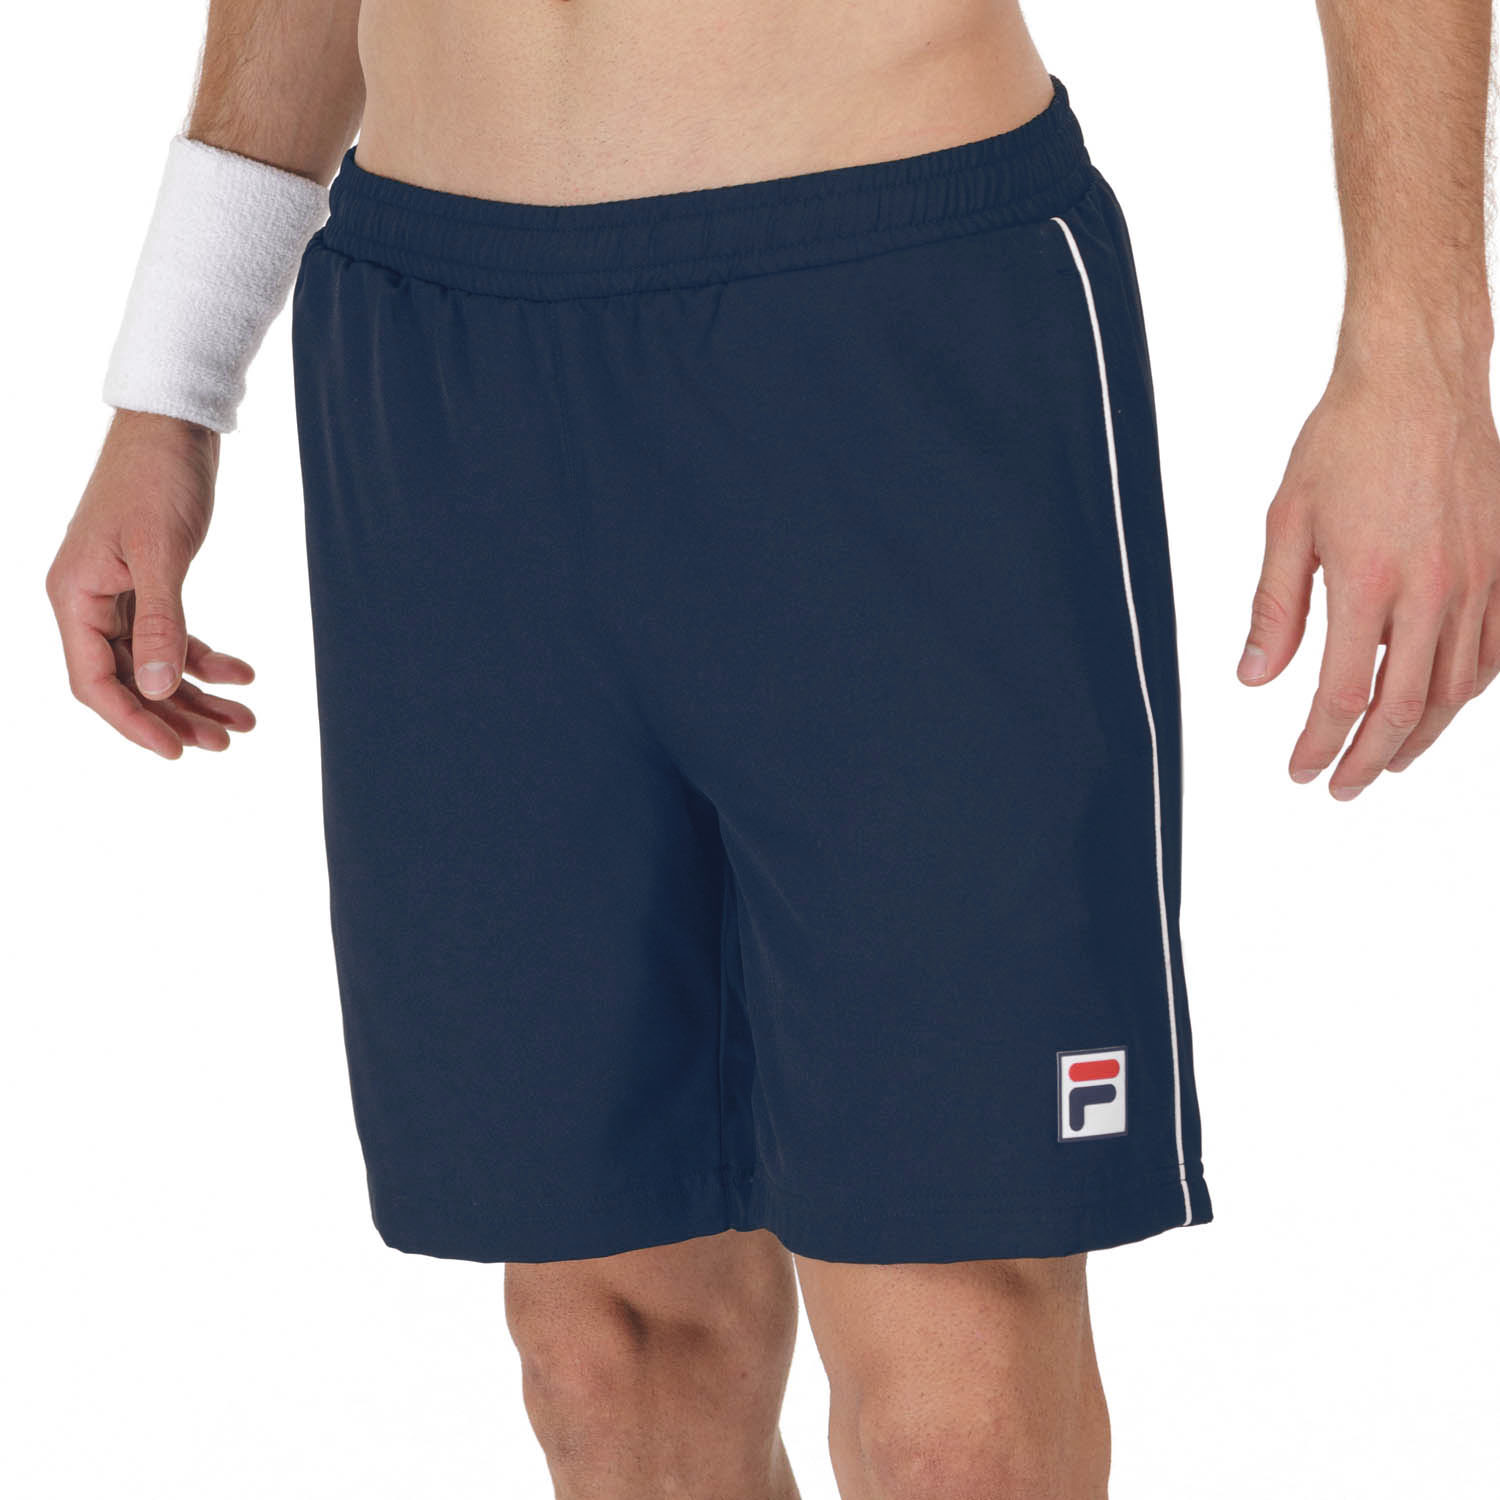 Fila Leon 7in Shorts - Peacoat Blue